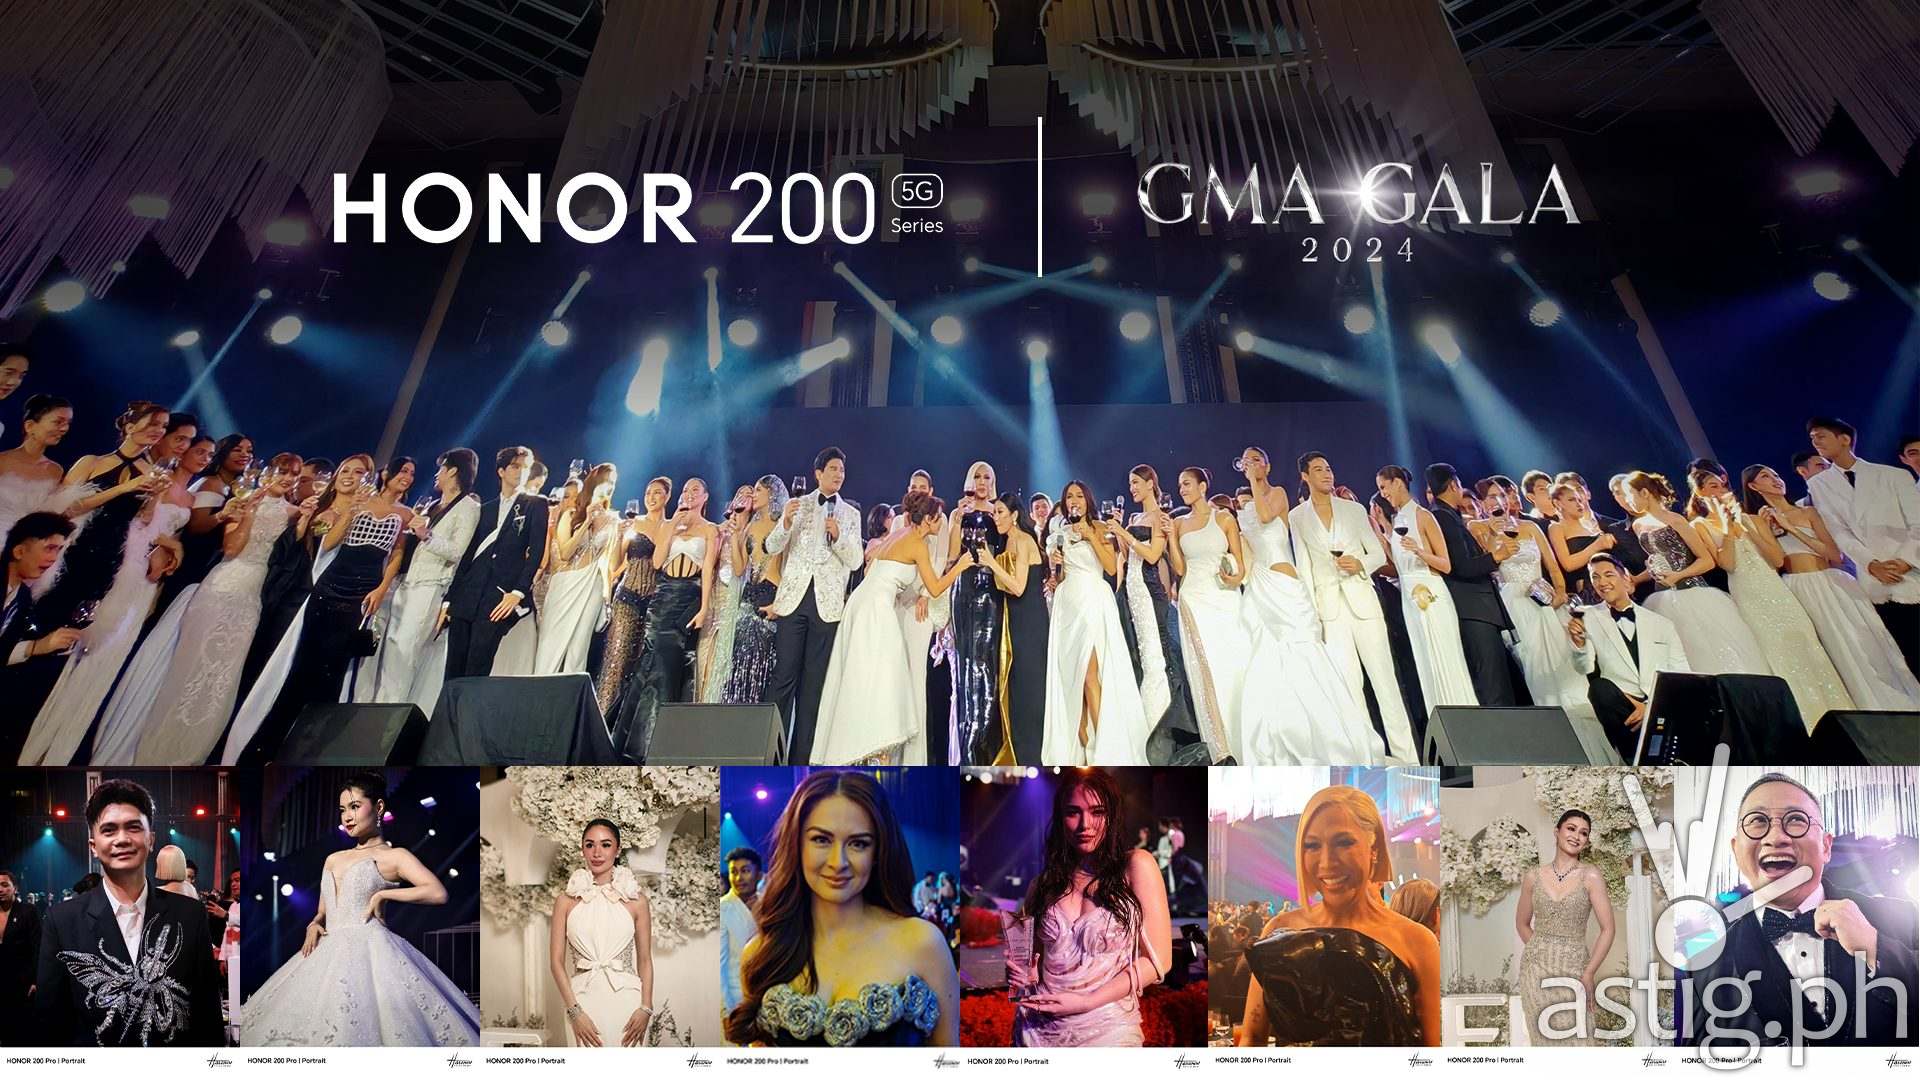 GMA Gala 2024 star Kylie Padilla shines with HONOR 200